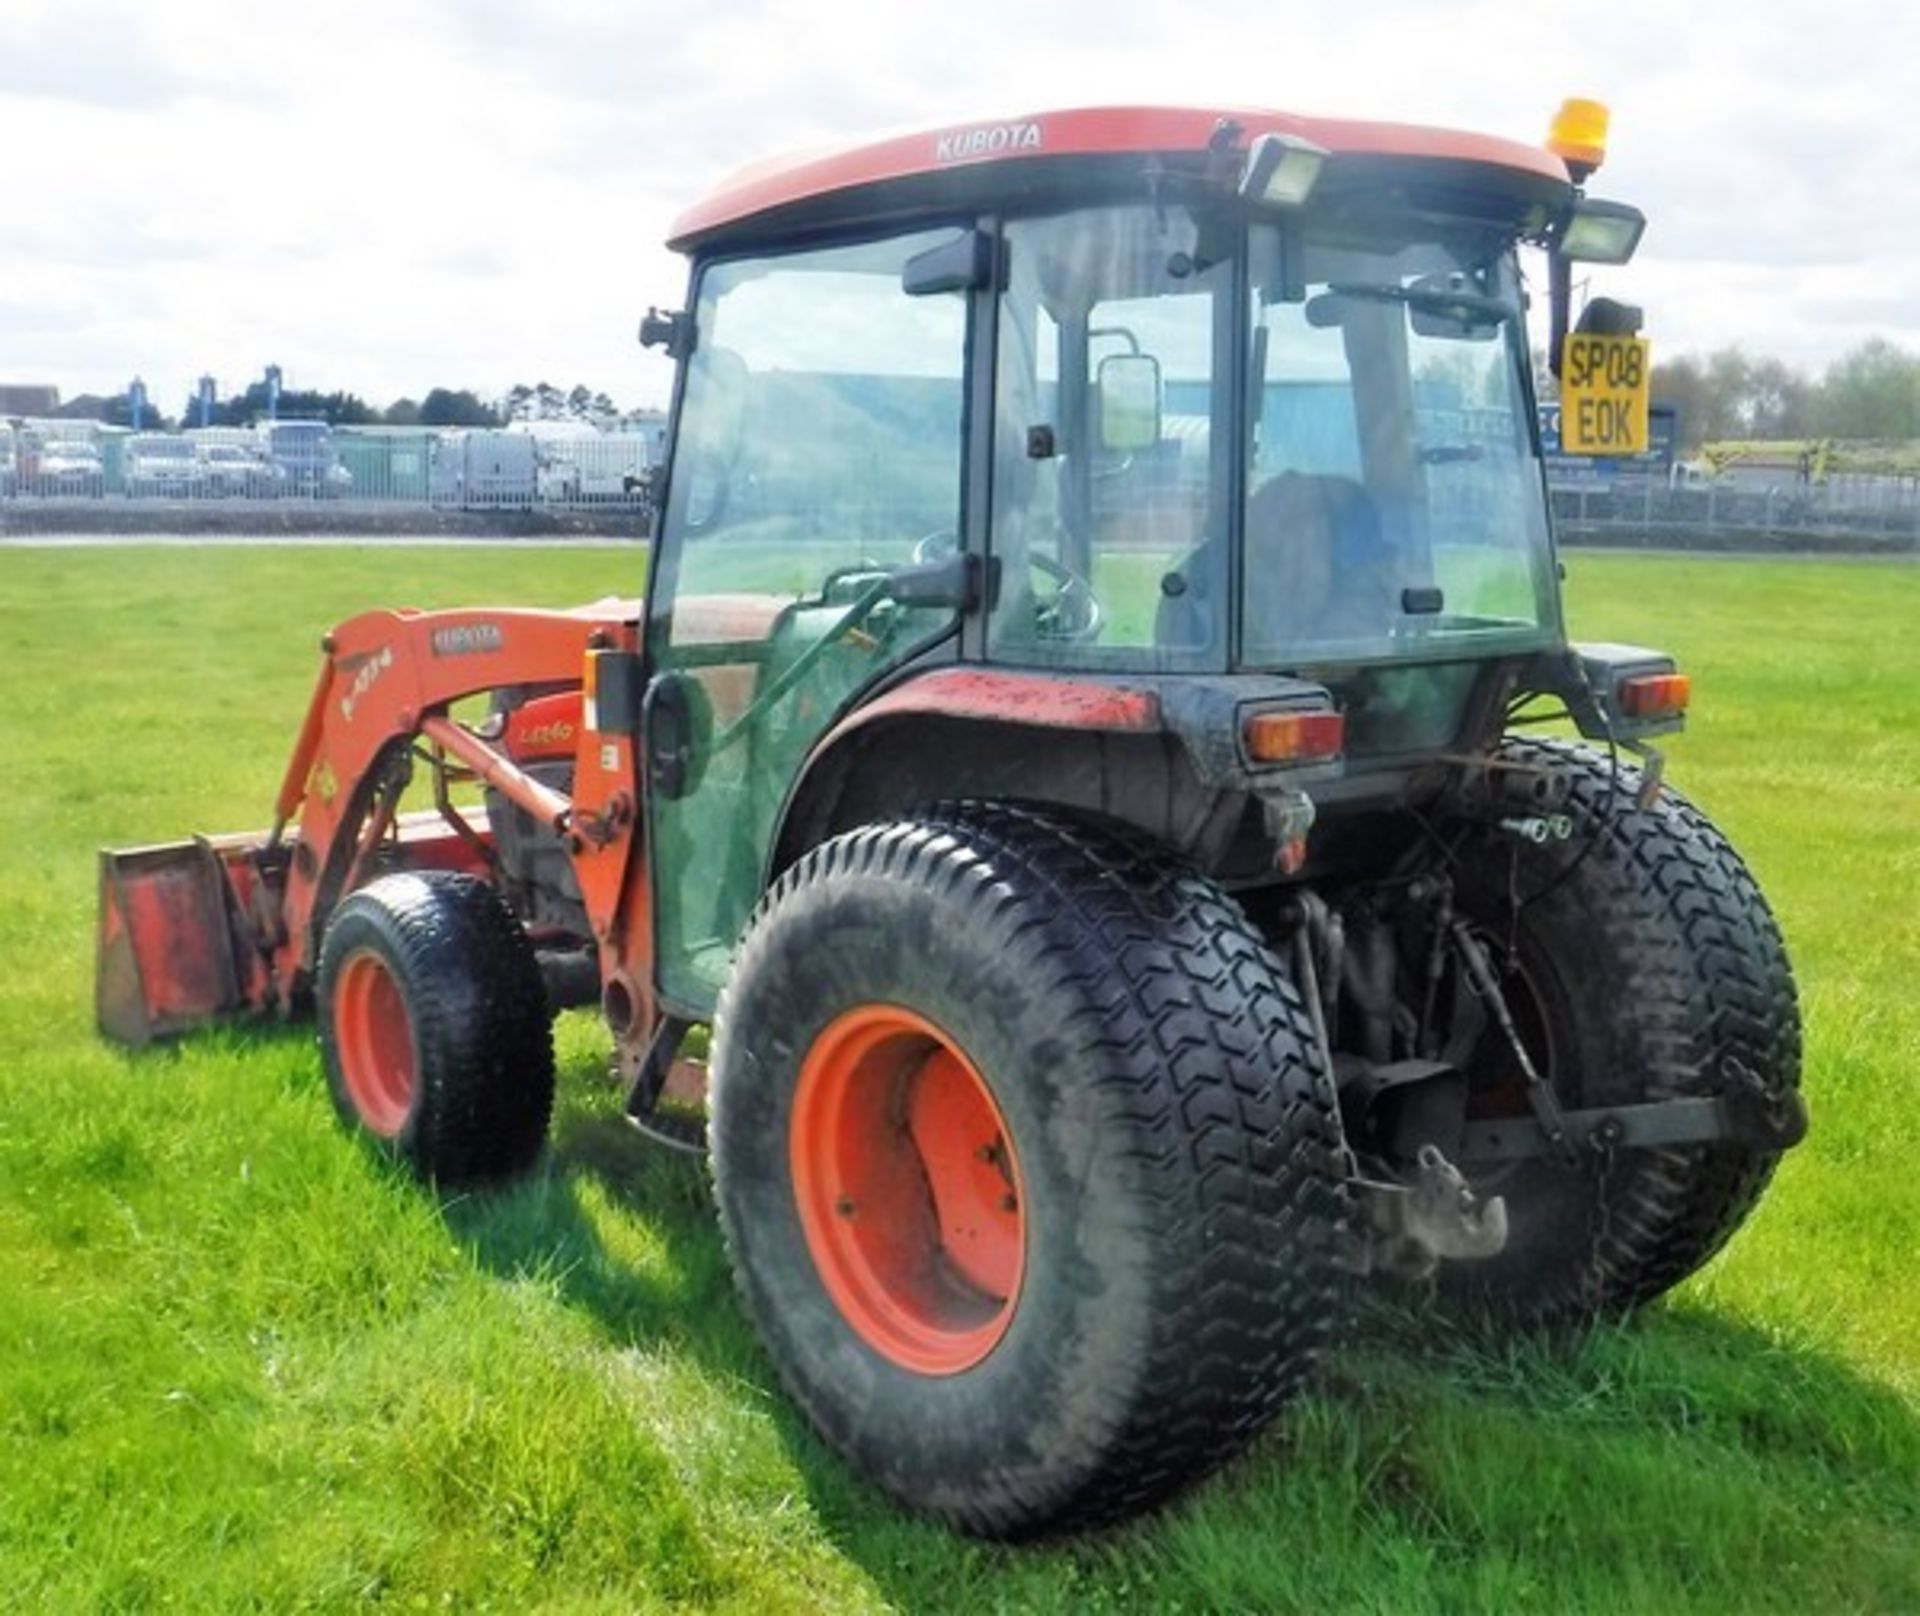 KUBOTA L4240 tractor c/w loader model LA714. Reg No SP08 EOK, s/n 3029671535. 3285 hrs (not verified - Bild 15 aus 17